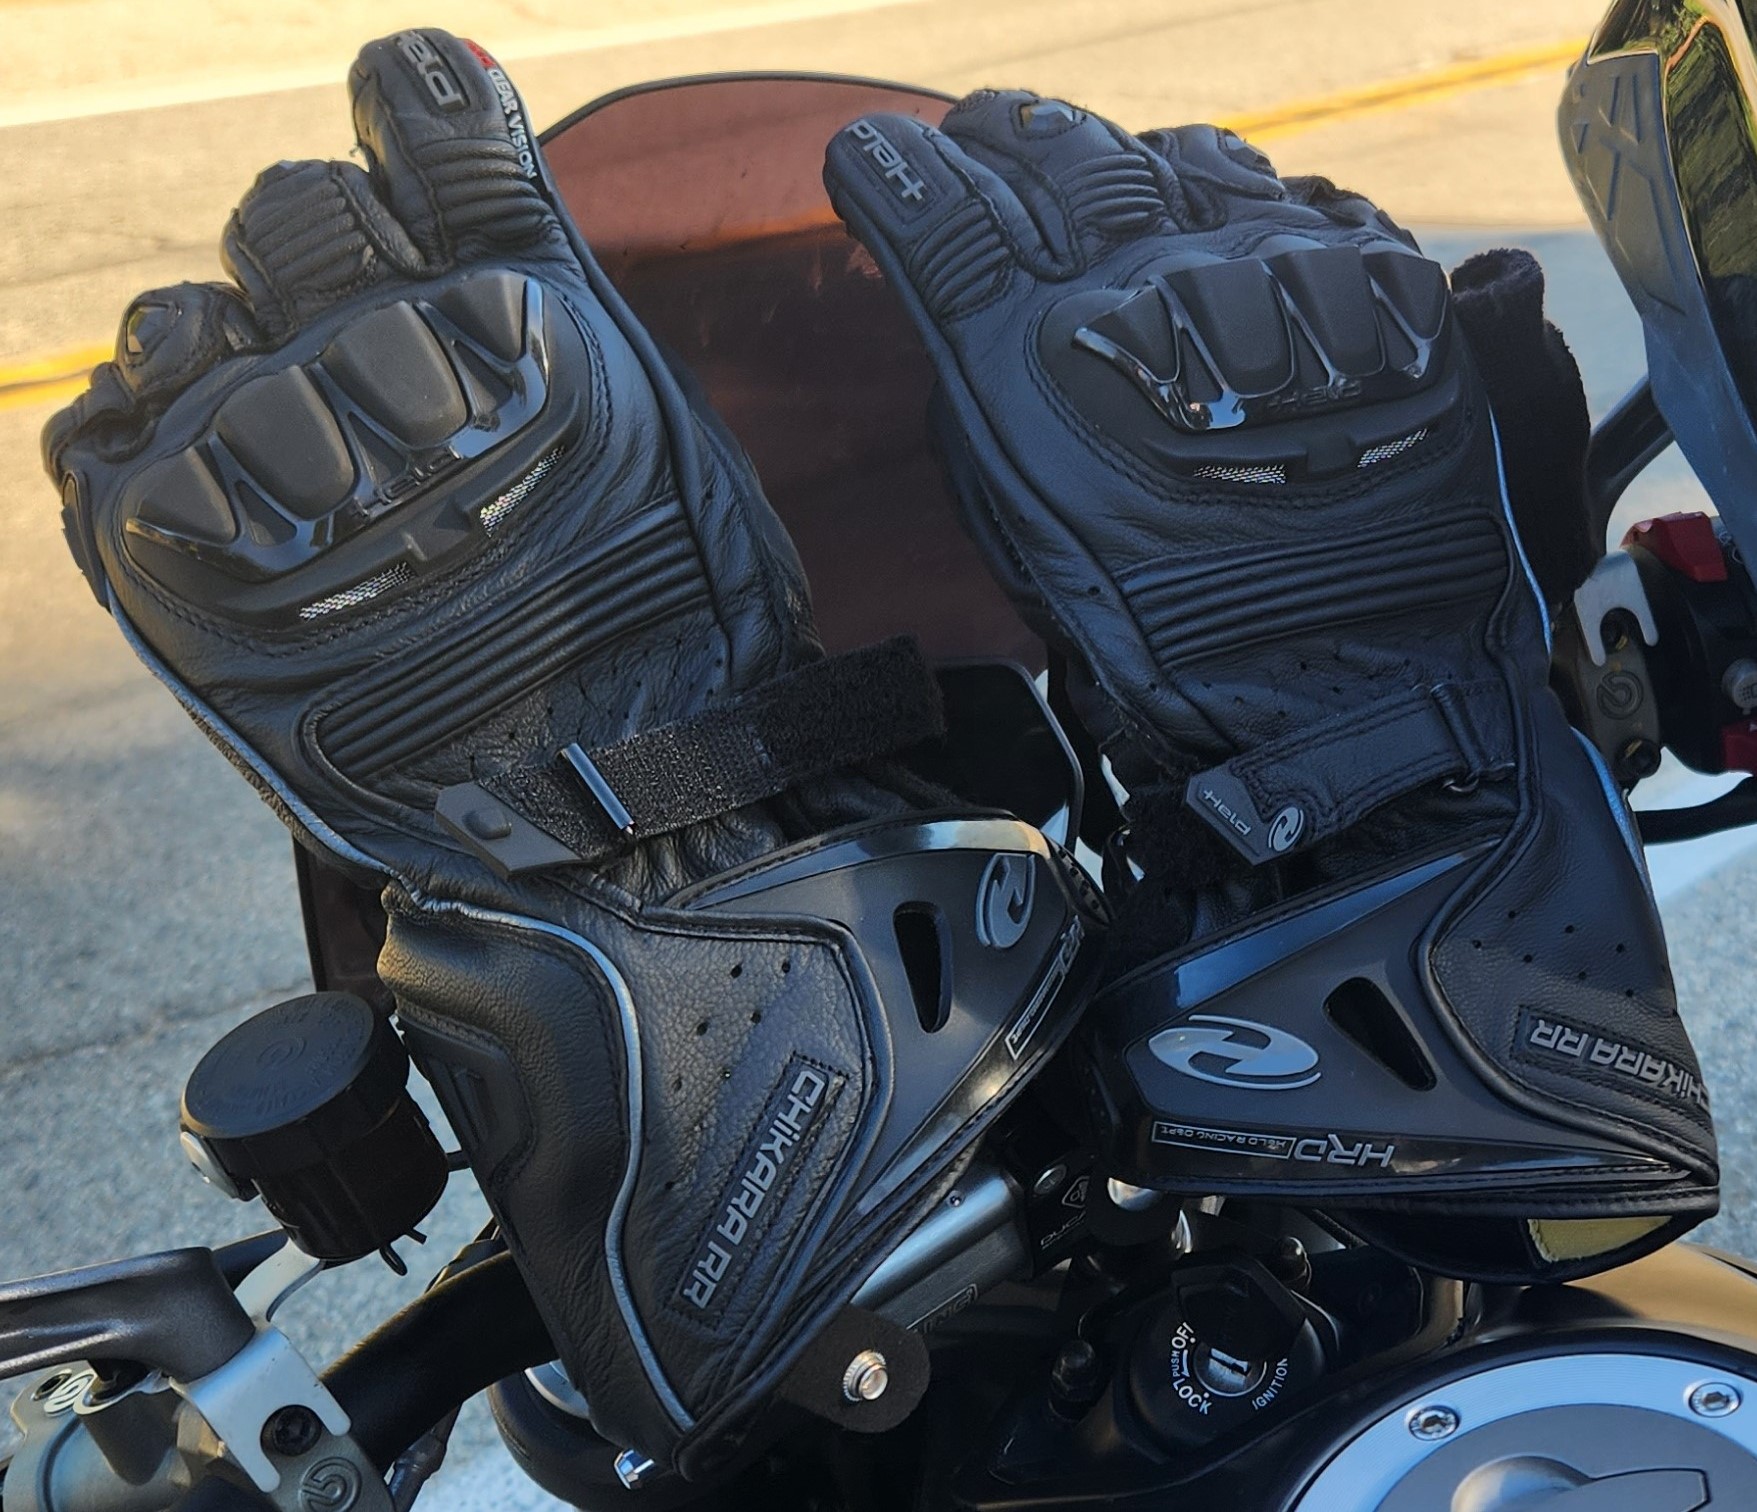 Held Chikara RR gloves with velcro straps undone